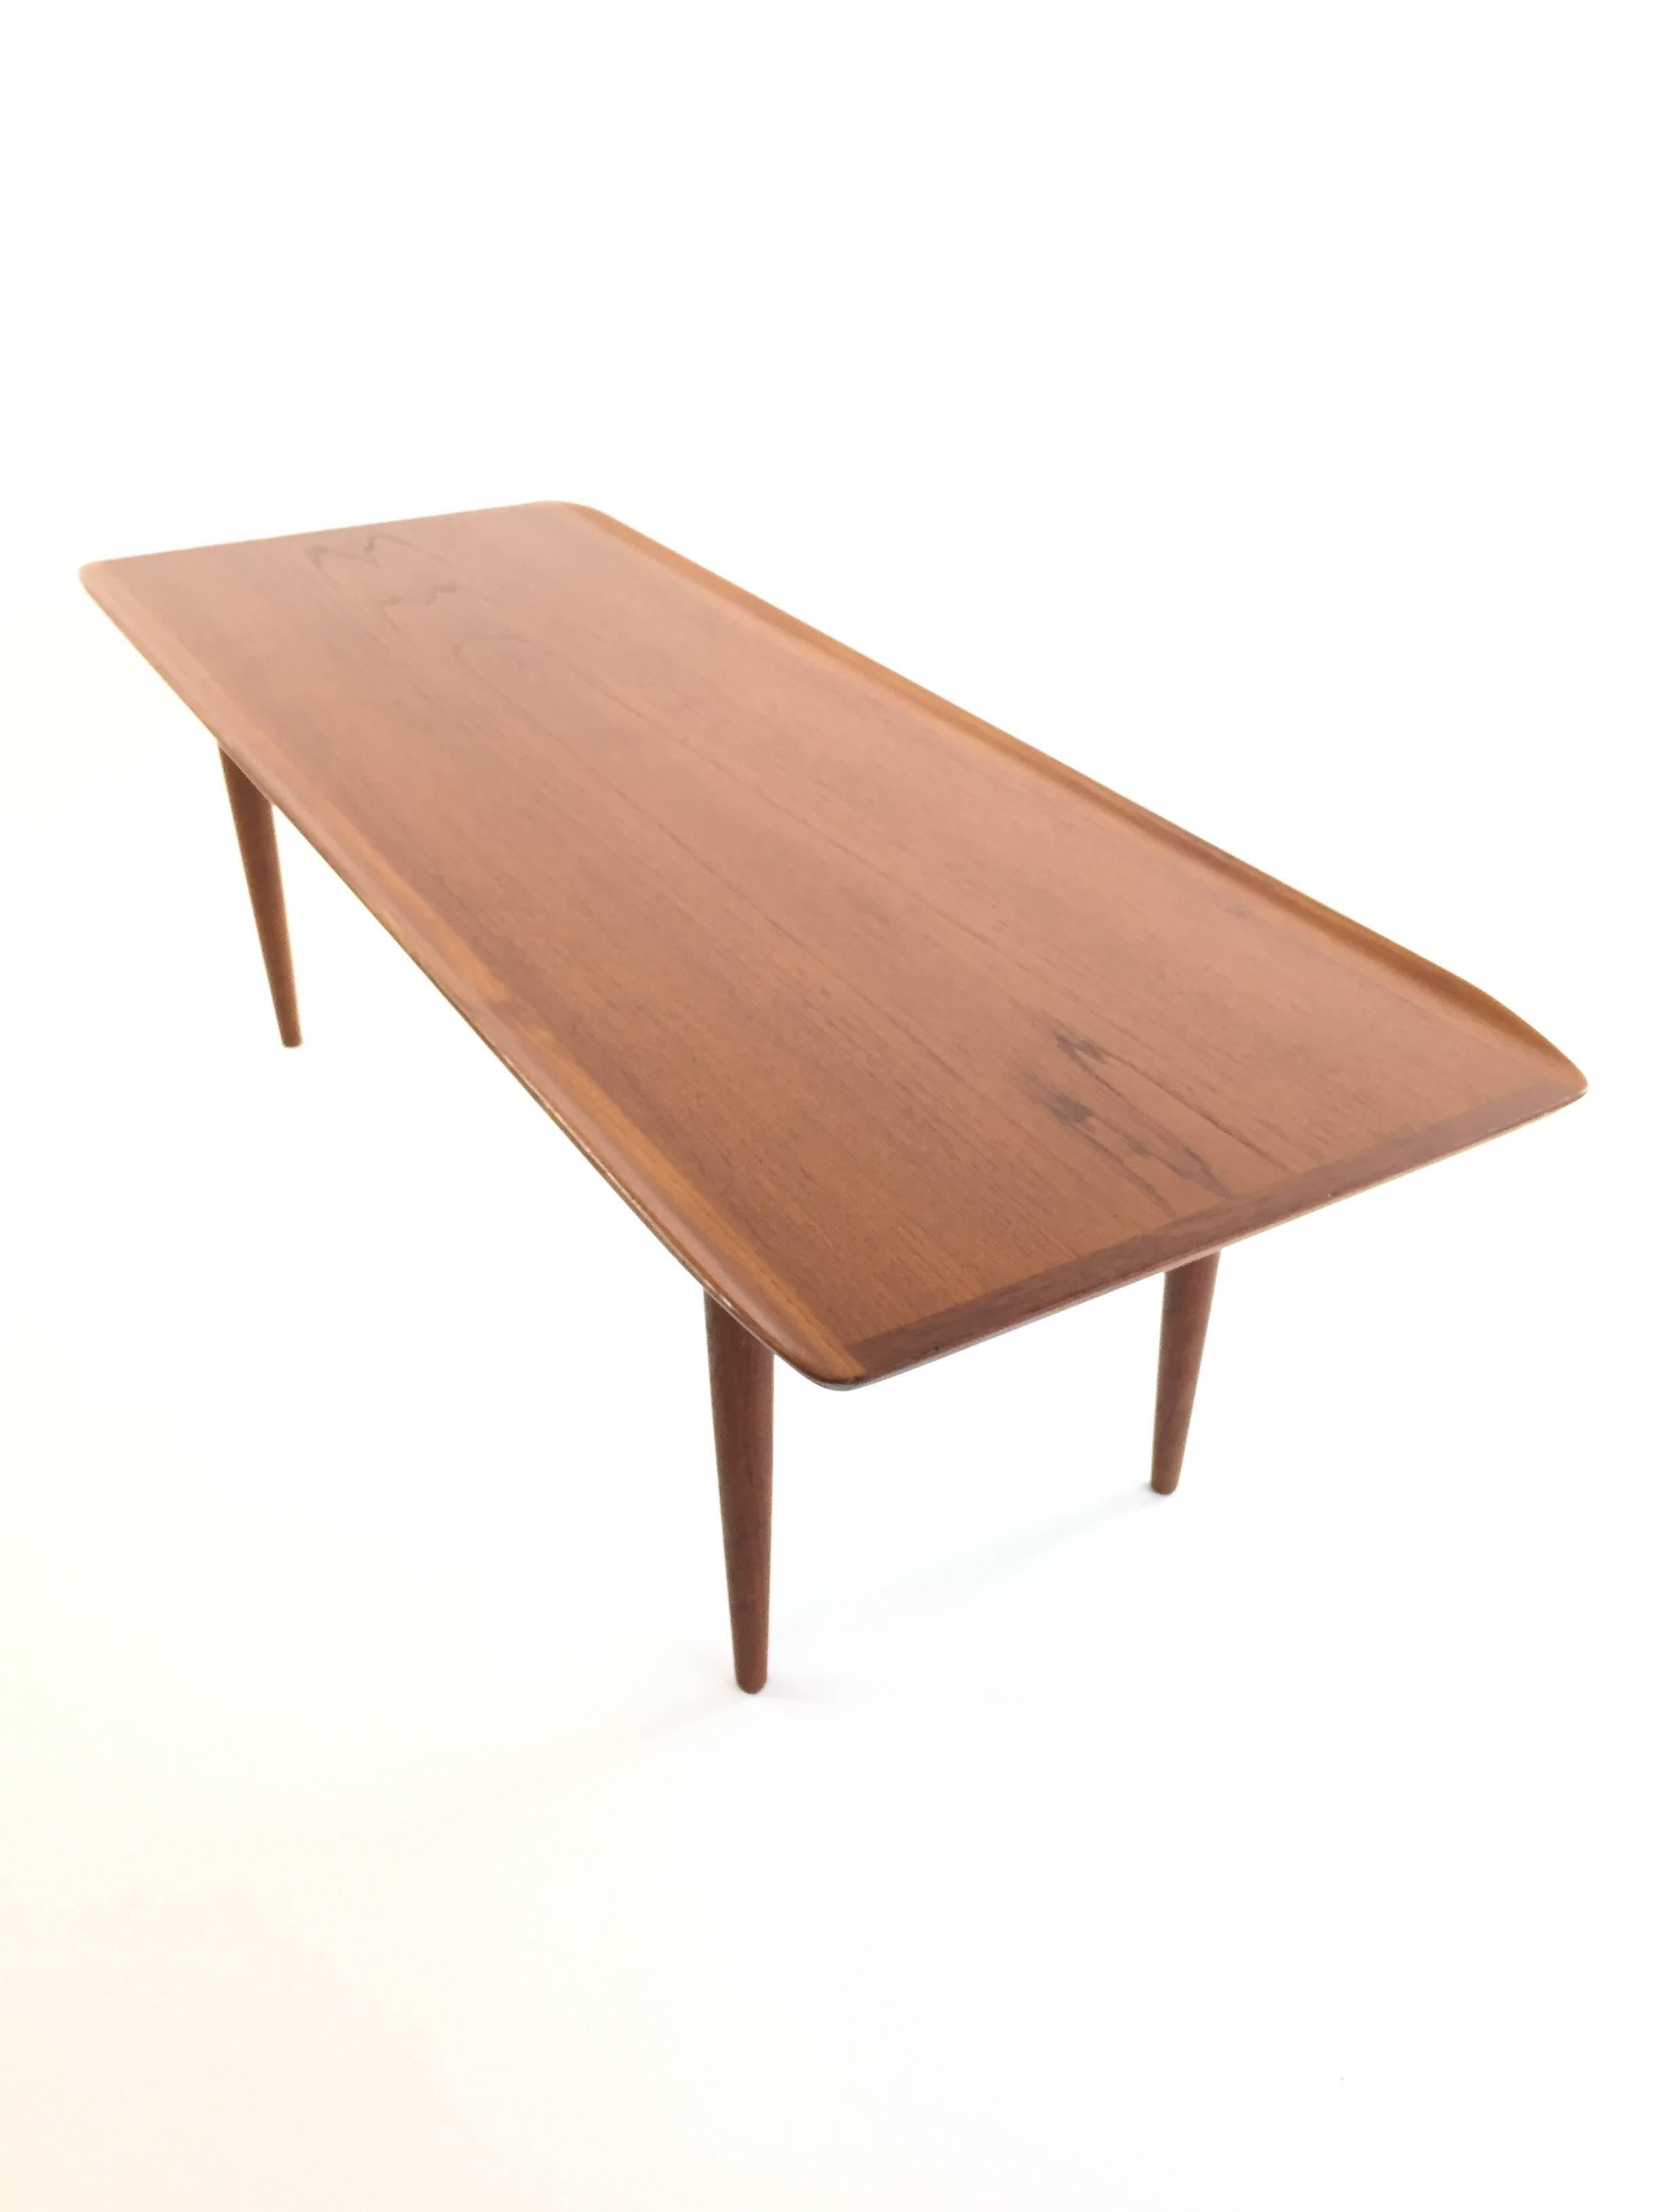 Lovely elongated midcentury teak coffee table.